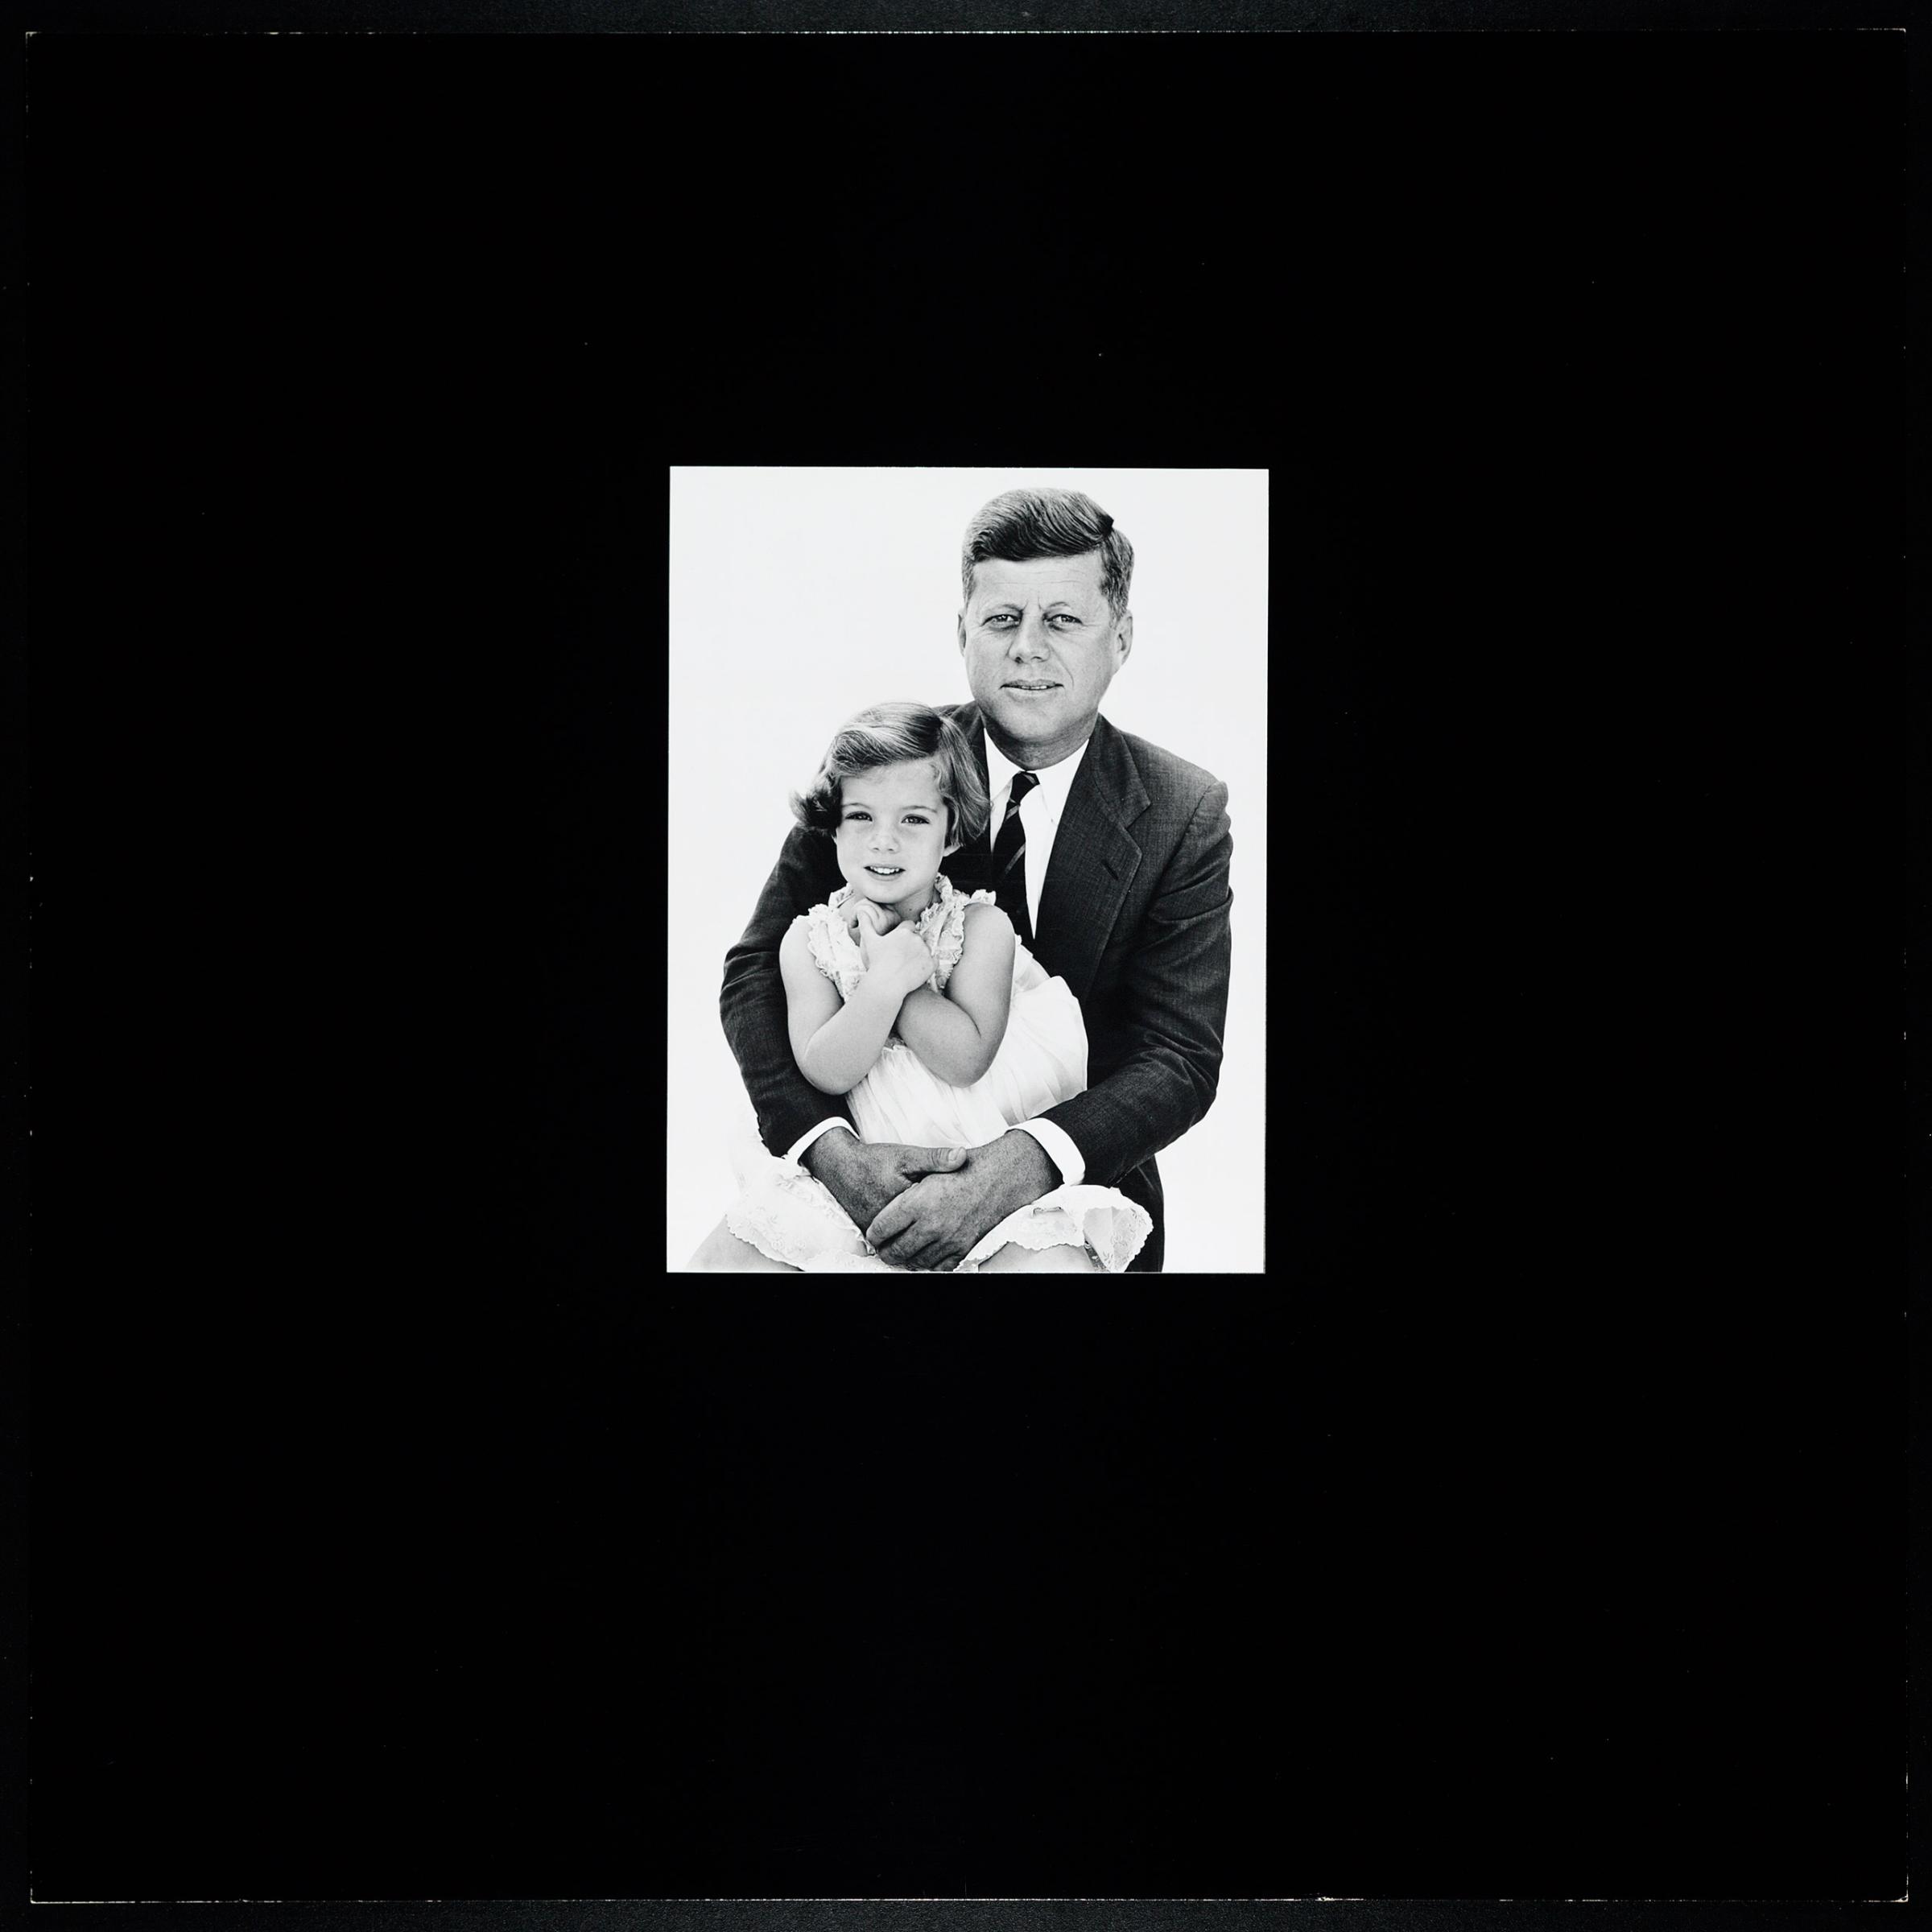 JFK and Family by Richard Avedon